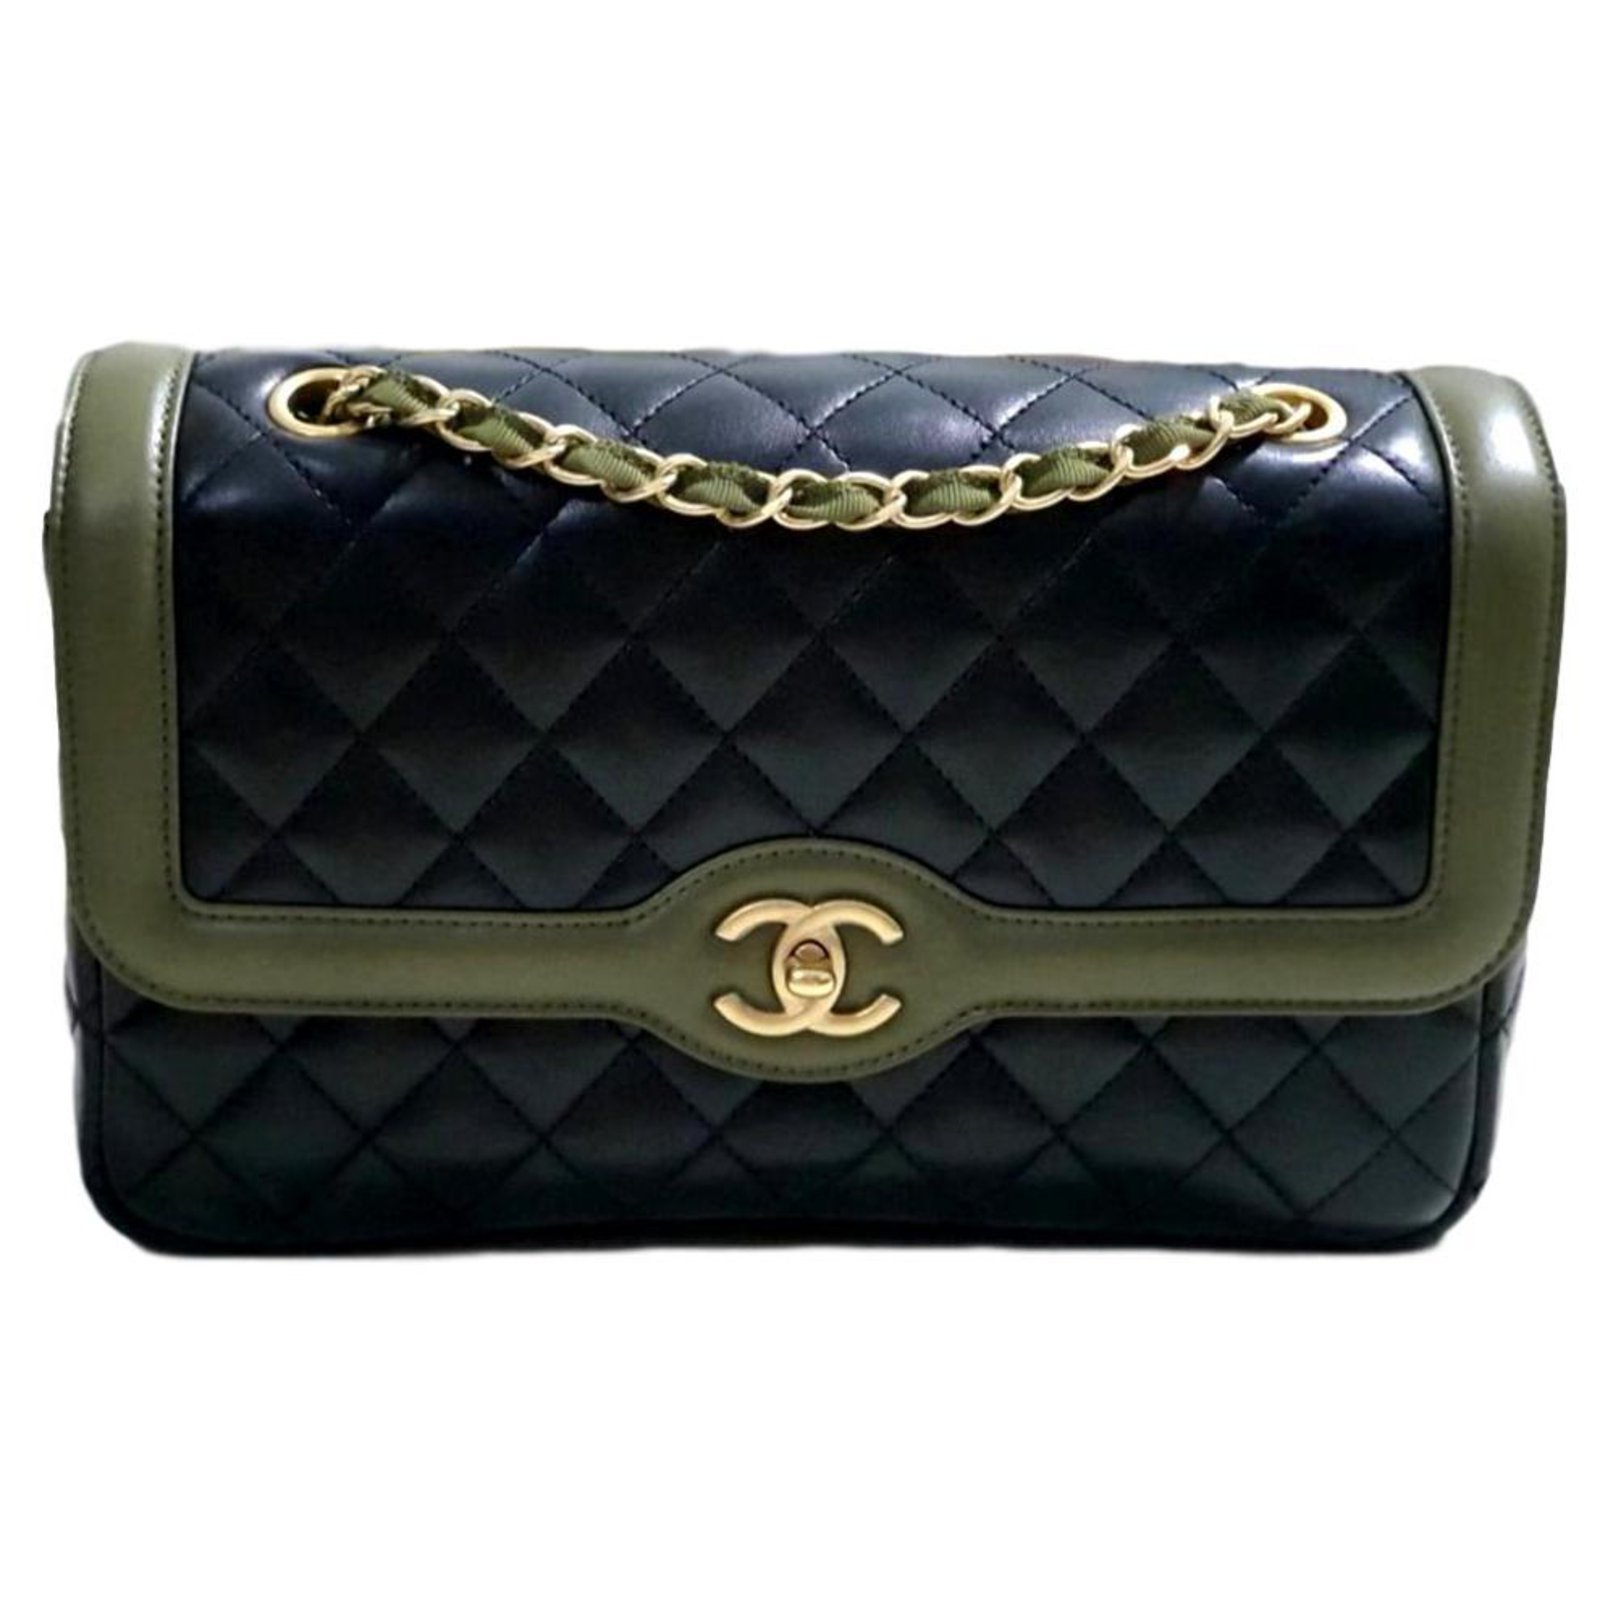 Chanel Medium Flap bag Cruise 2016